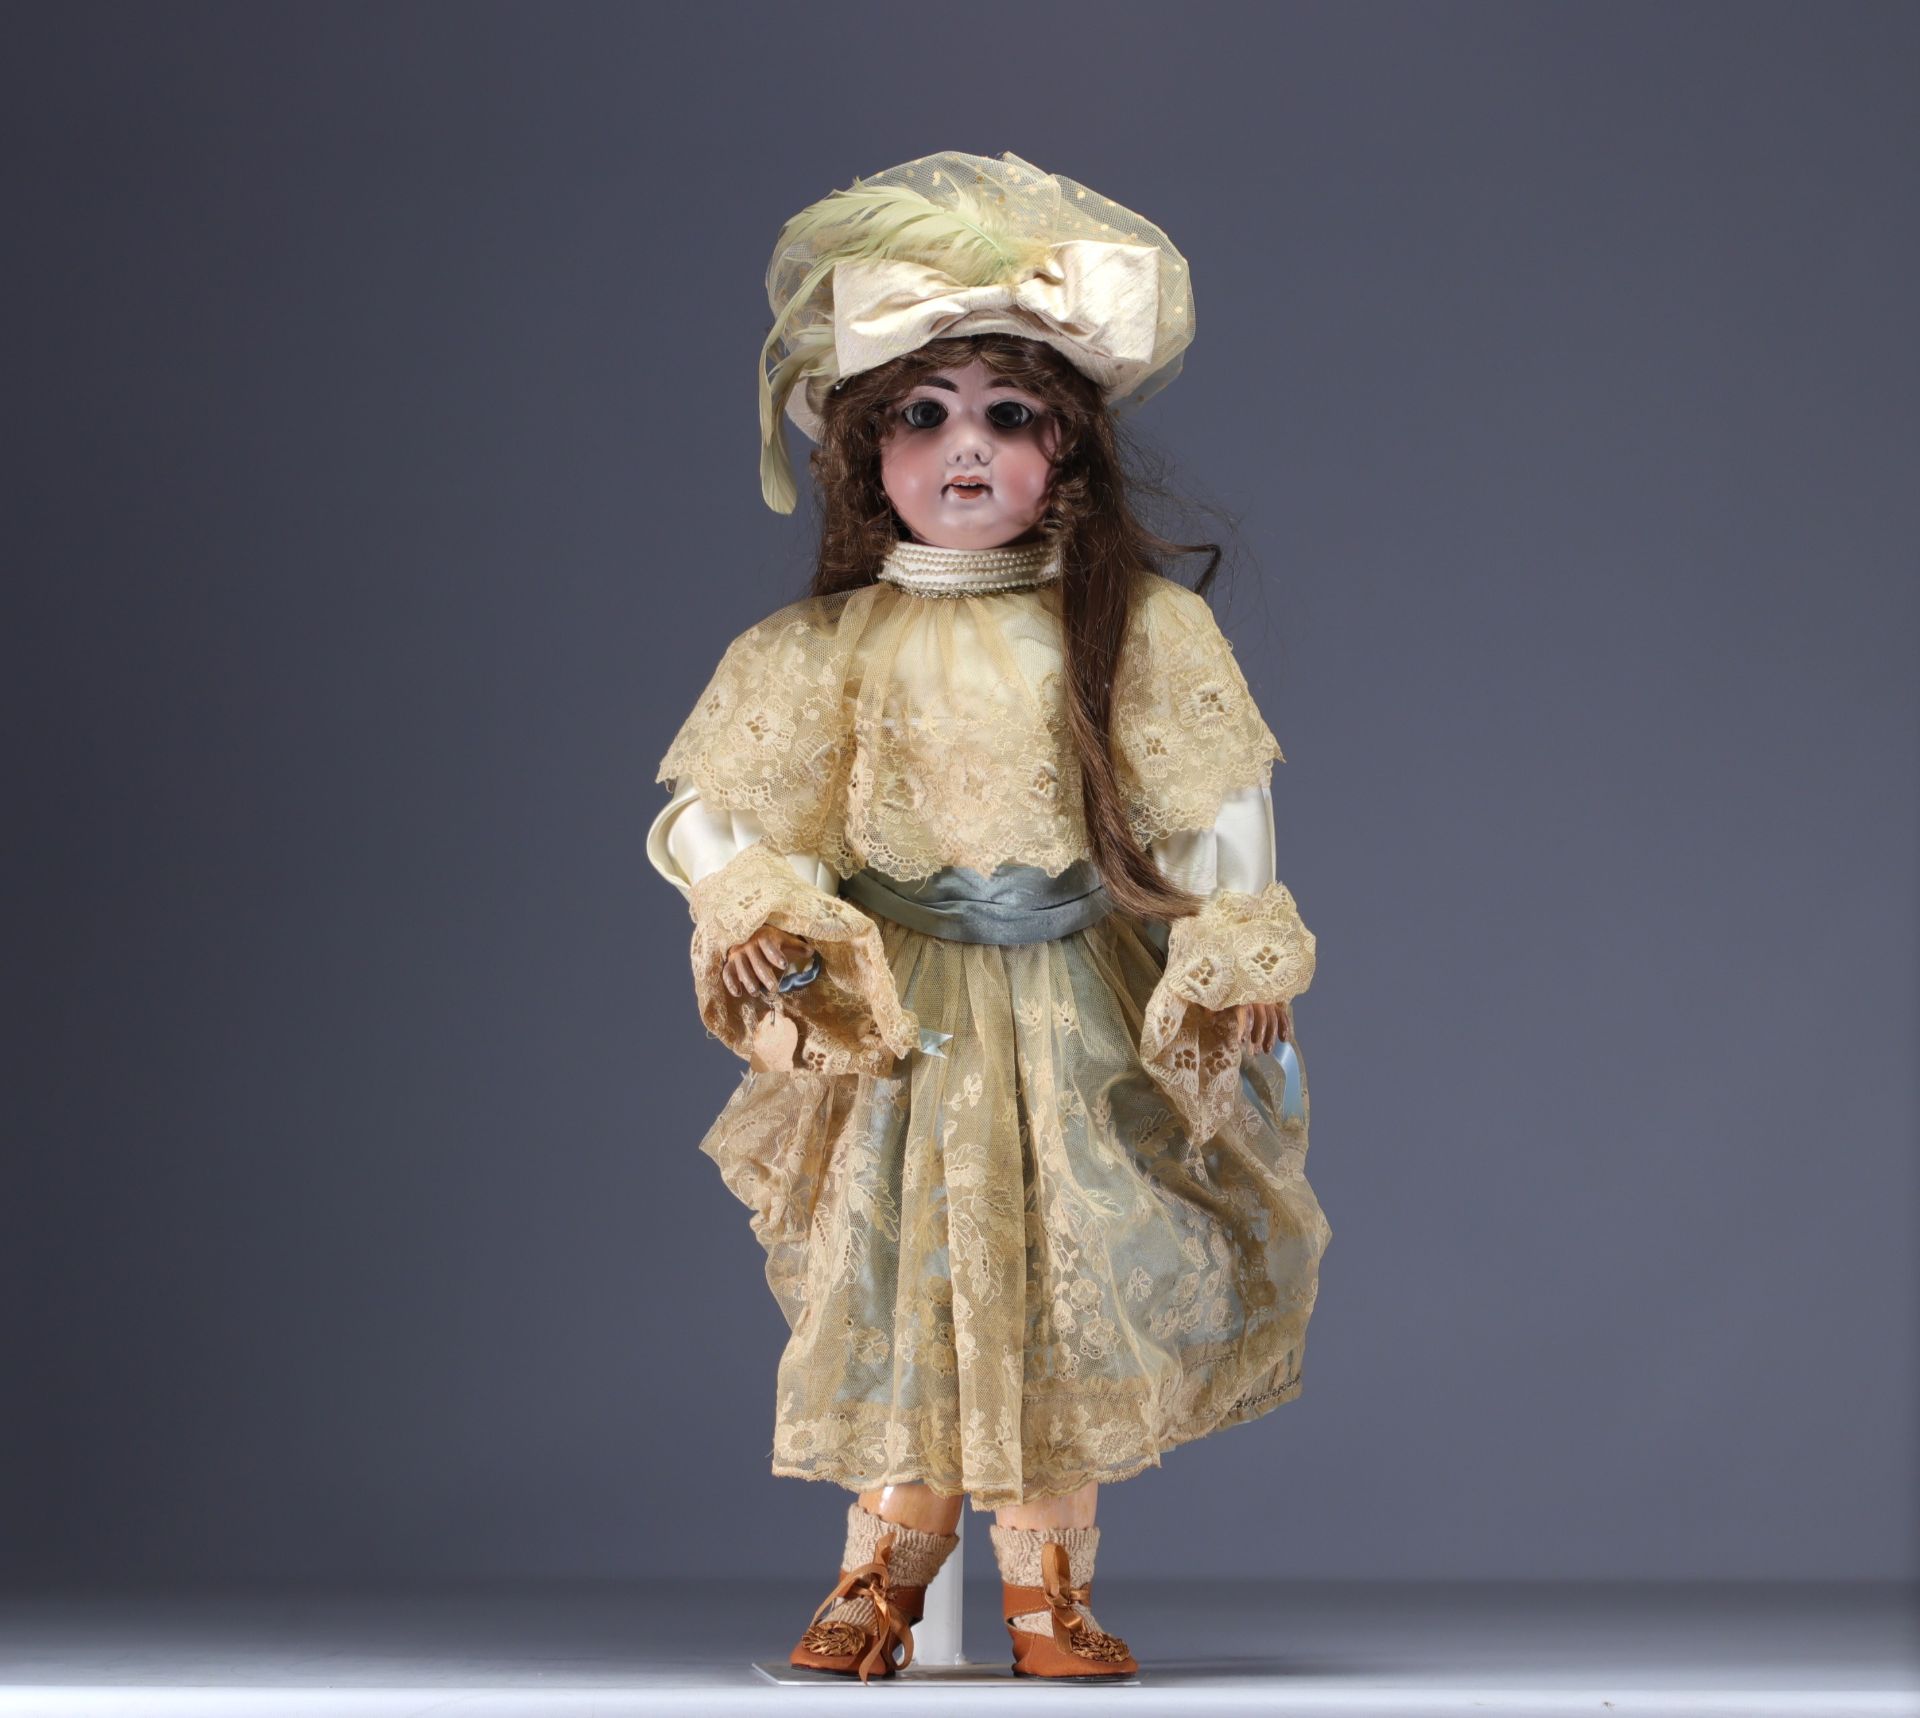 Armand MARSEILLE - Porcelain head doll nÂ°11, circa 1890. - Image 2 of 2